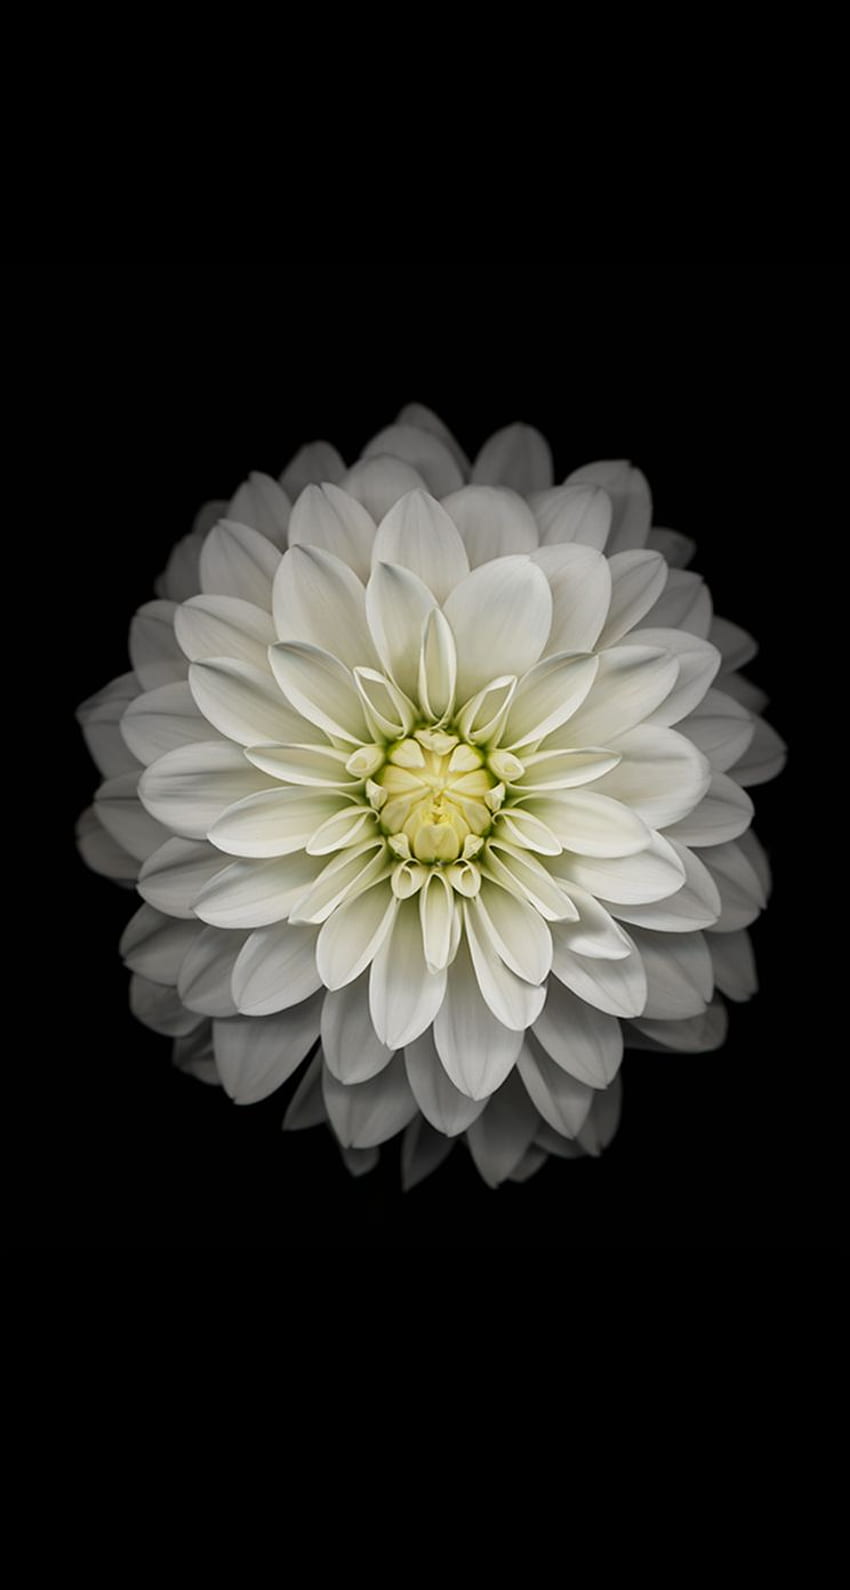 de iphone de manzana negra de flor de loto blanco. iPhone fondo de pantalla del teléfono